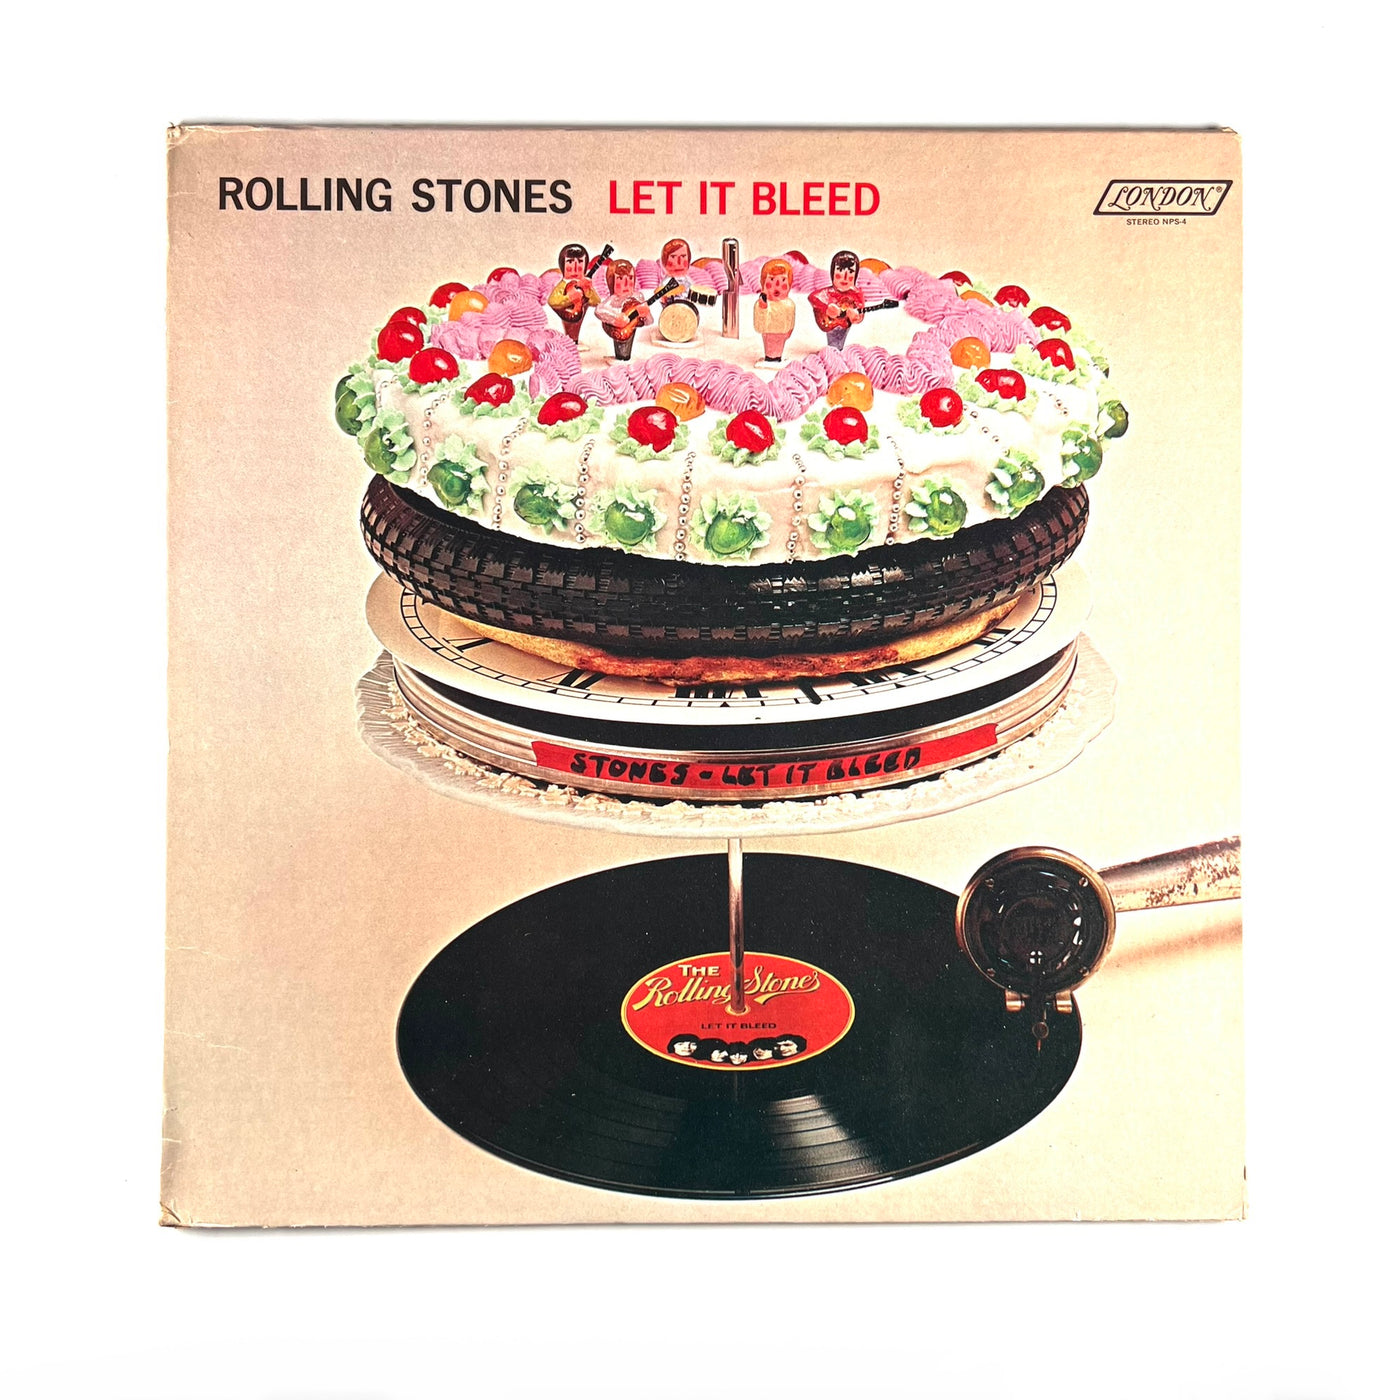 The Rolling Stones - Let It Bleed - 1969 US Bestway Press